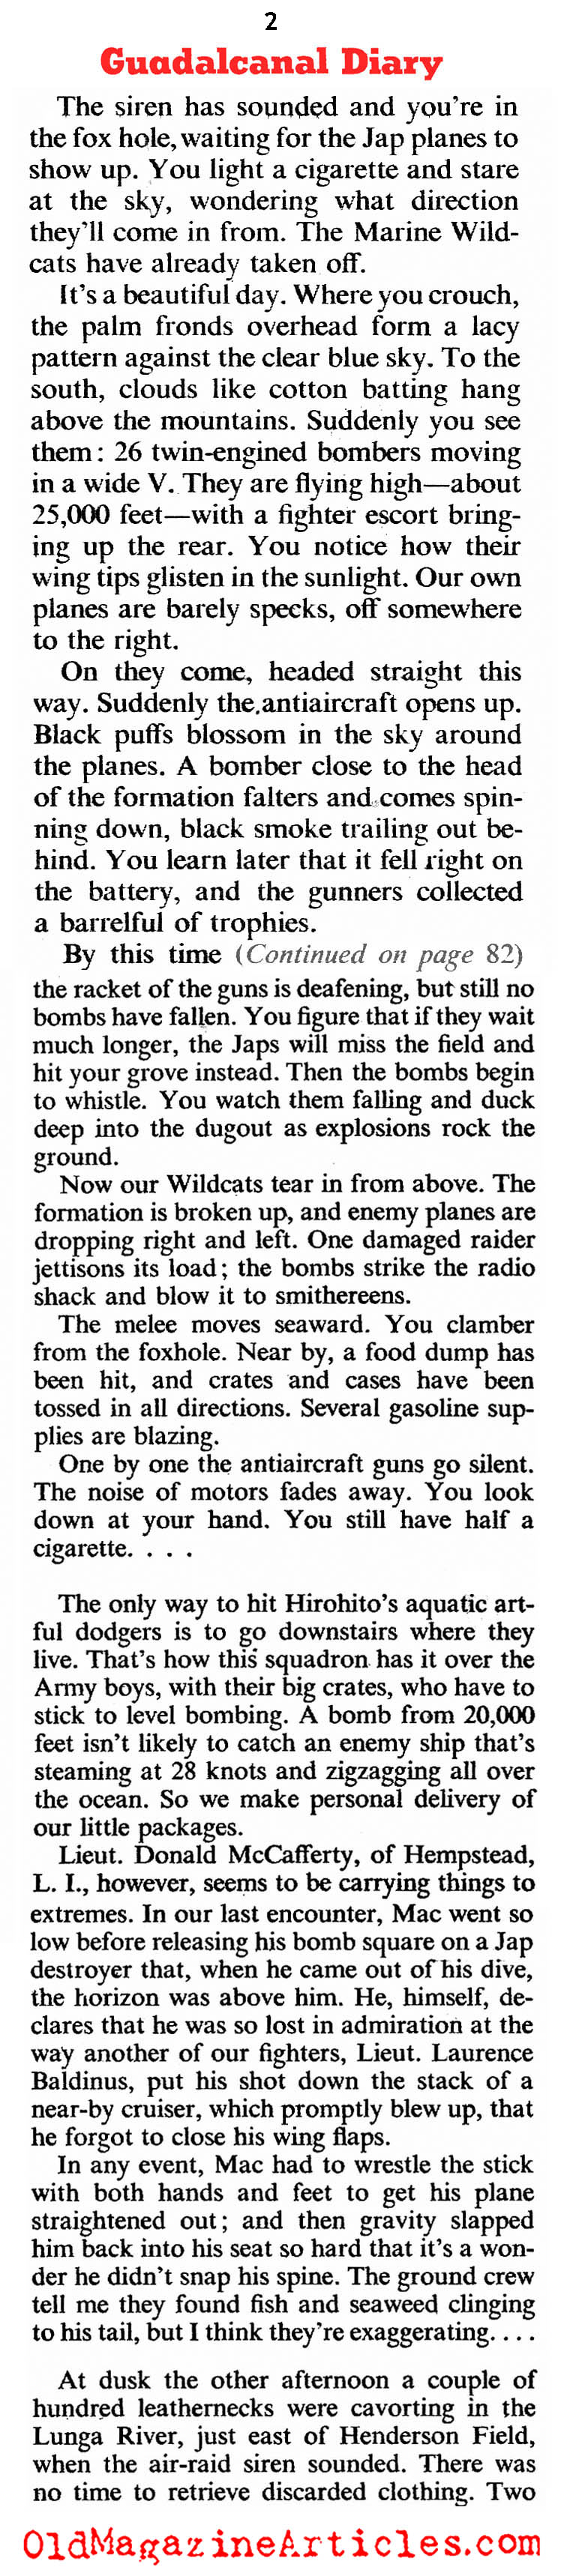 ''Guadalcanal Diary'' (The American Magazine, 1943)